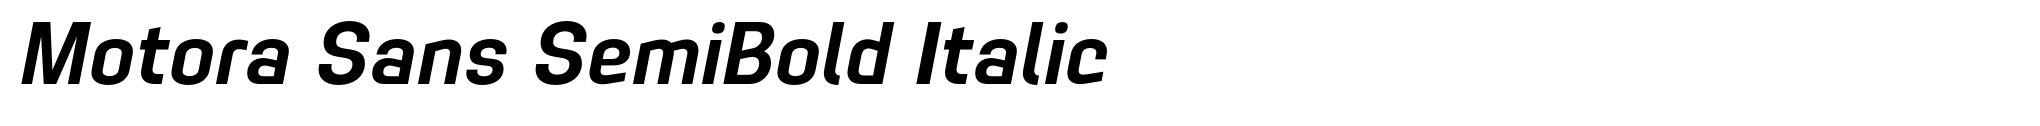 Motora Sans SemiBold Italic image